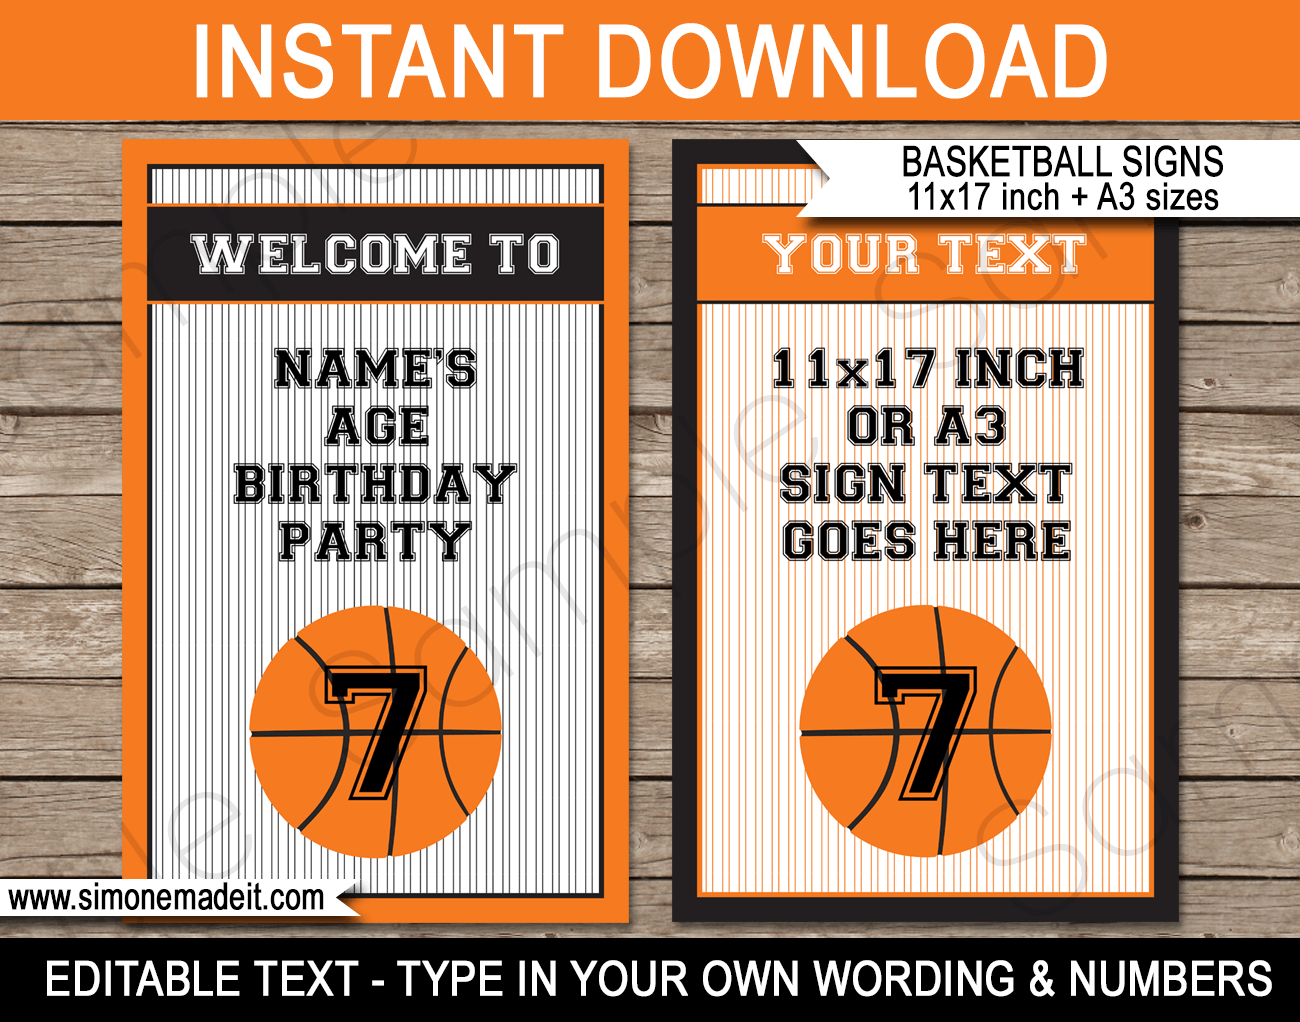 Basketball Party Signs | Party Decorations | Editable & Printable DIY Template | Tabloid / Ledger 11x17 inches | A3 | $4.00 via SIMONEmadeit.com